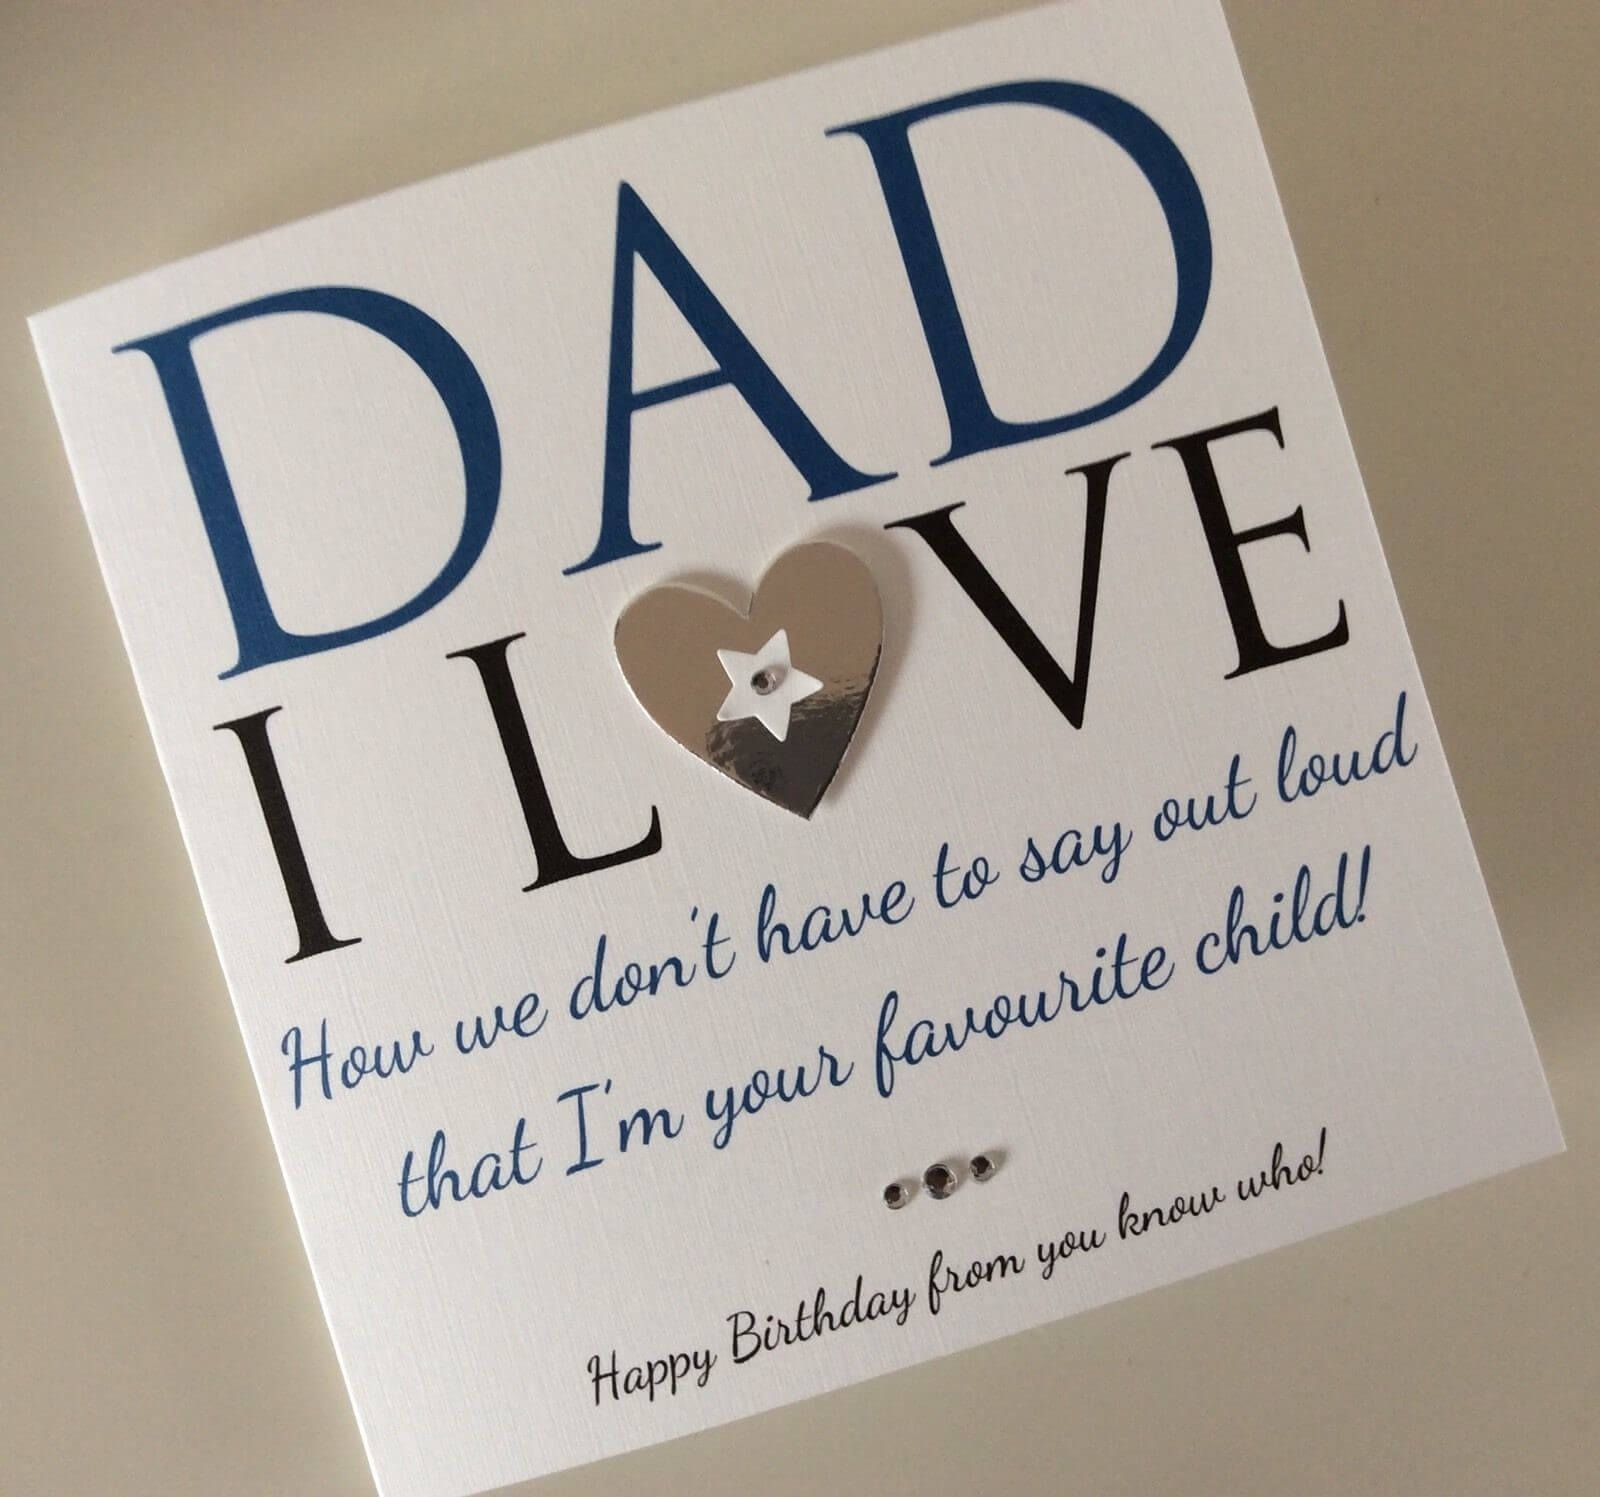 Dad Birthday Card Ideas 98 Birthday Greetings Cards For Dad Dad Birthday Card From Kids